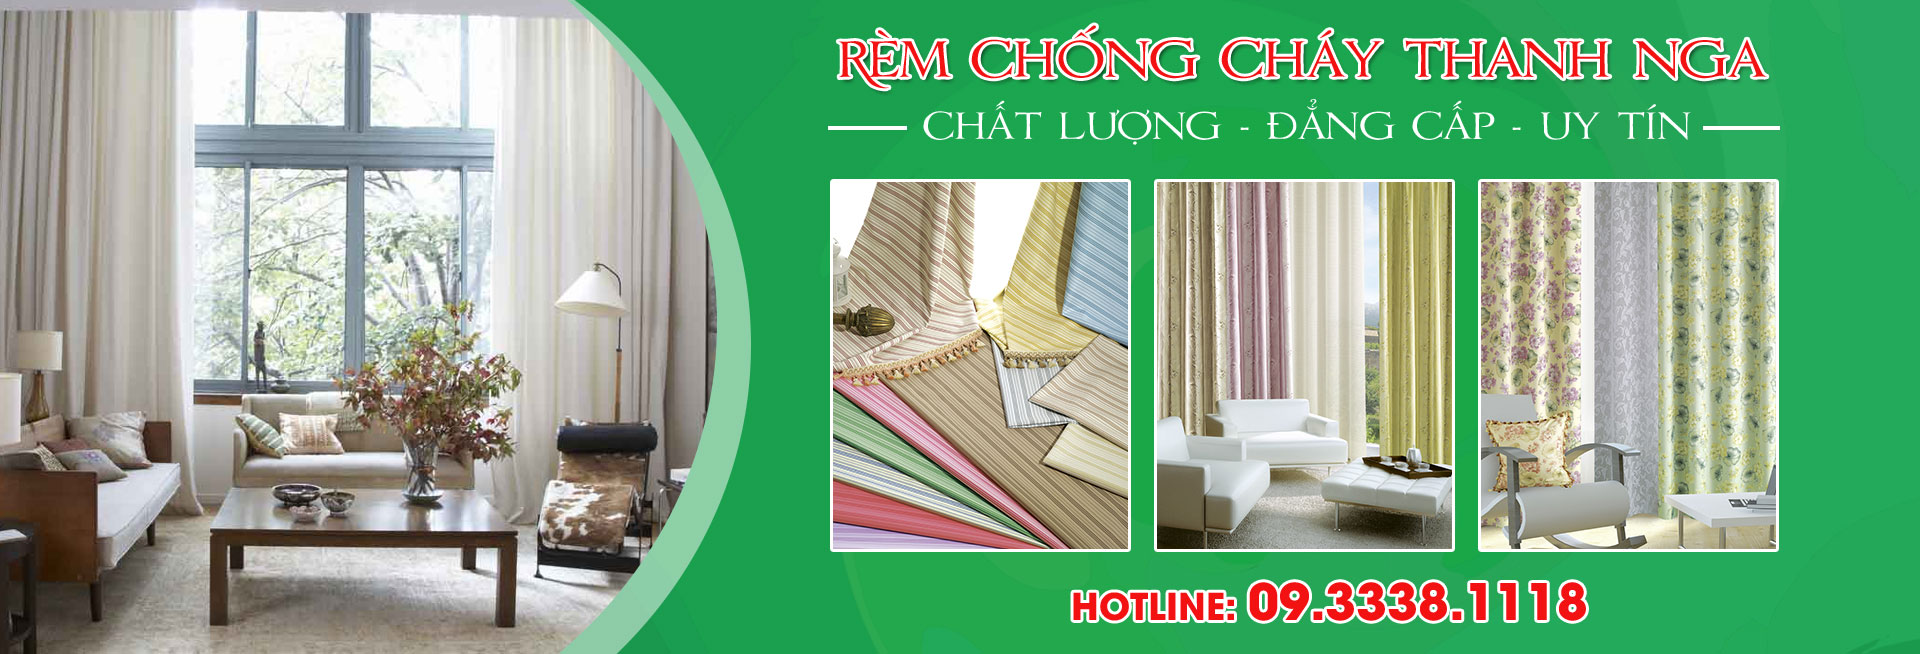 banner-slide2-rem-chong-chay